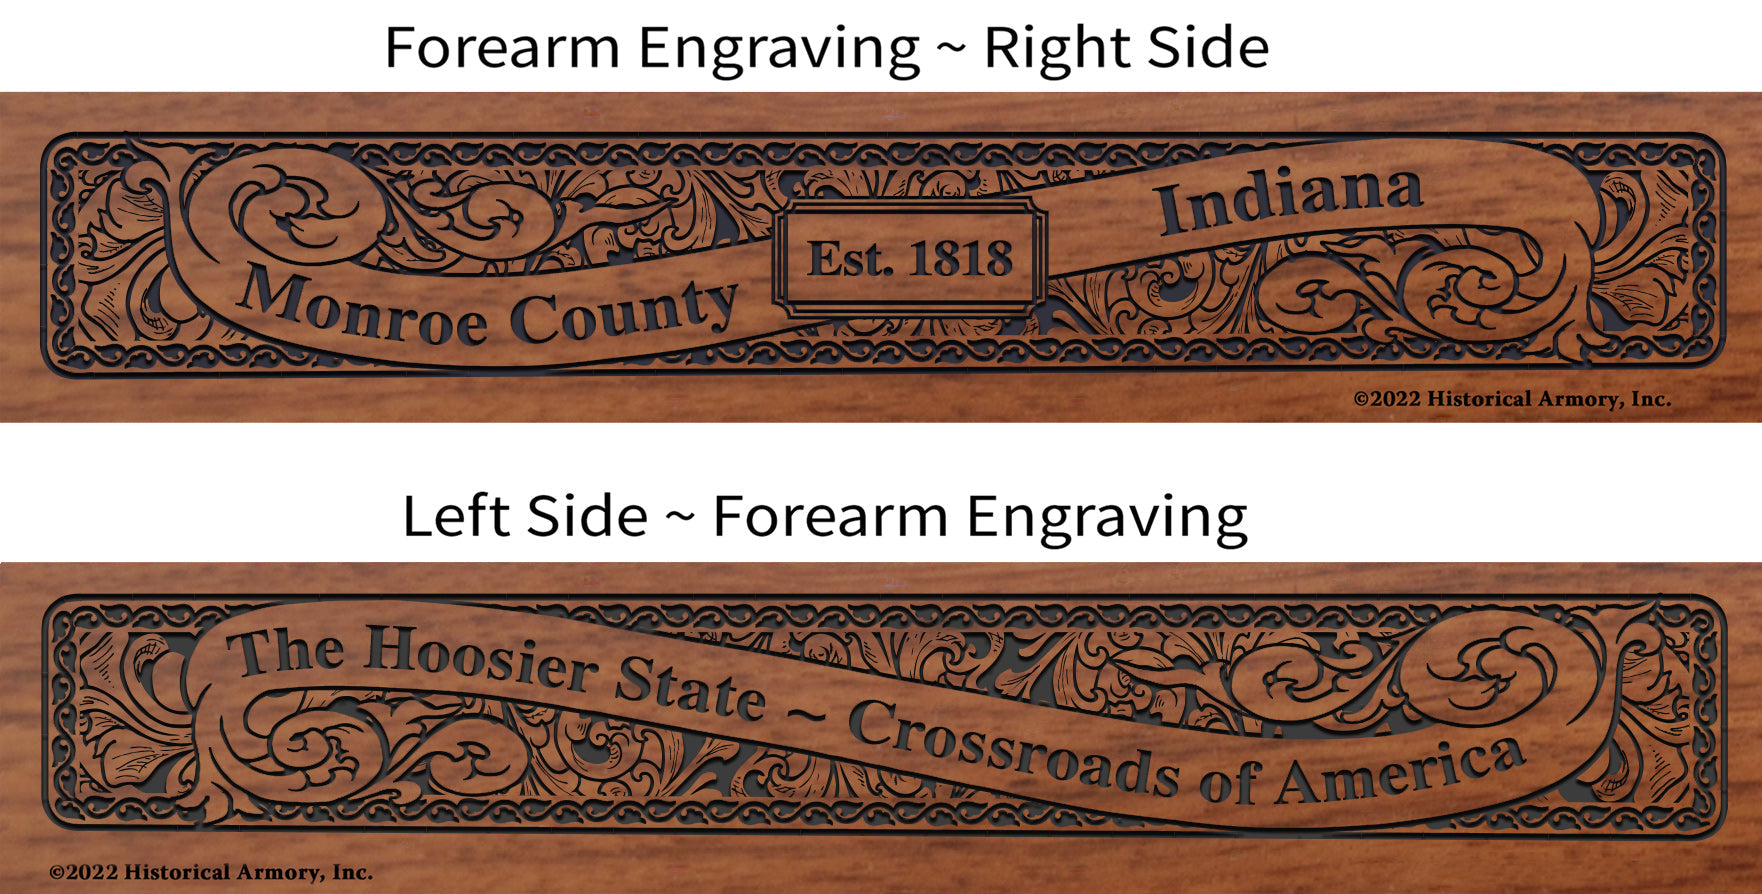 Monroe County Indiana Engraved Rifle Forearm